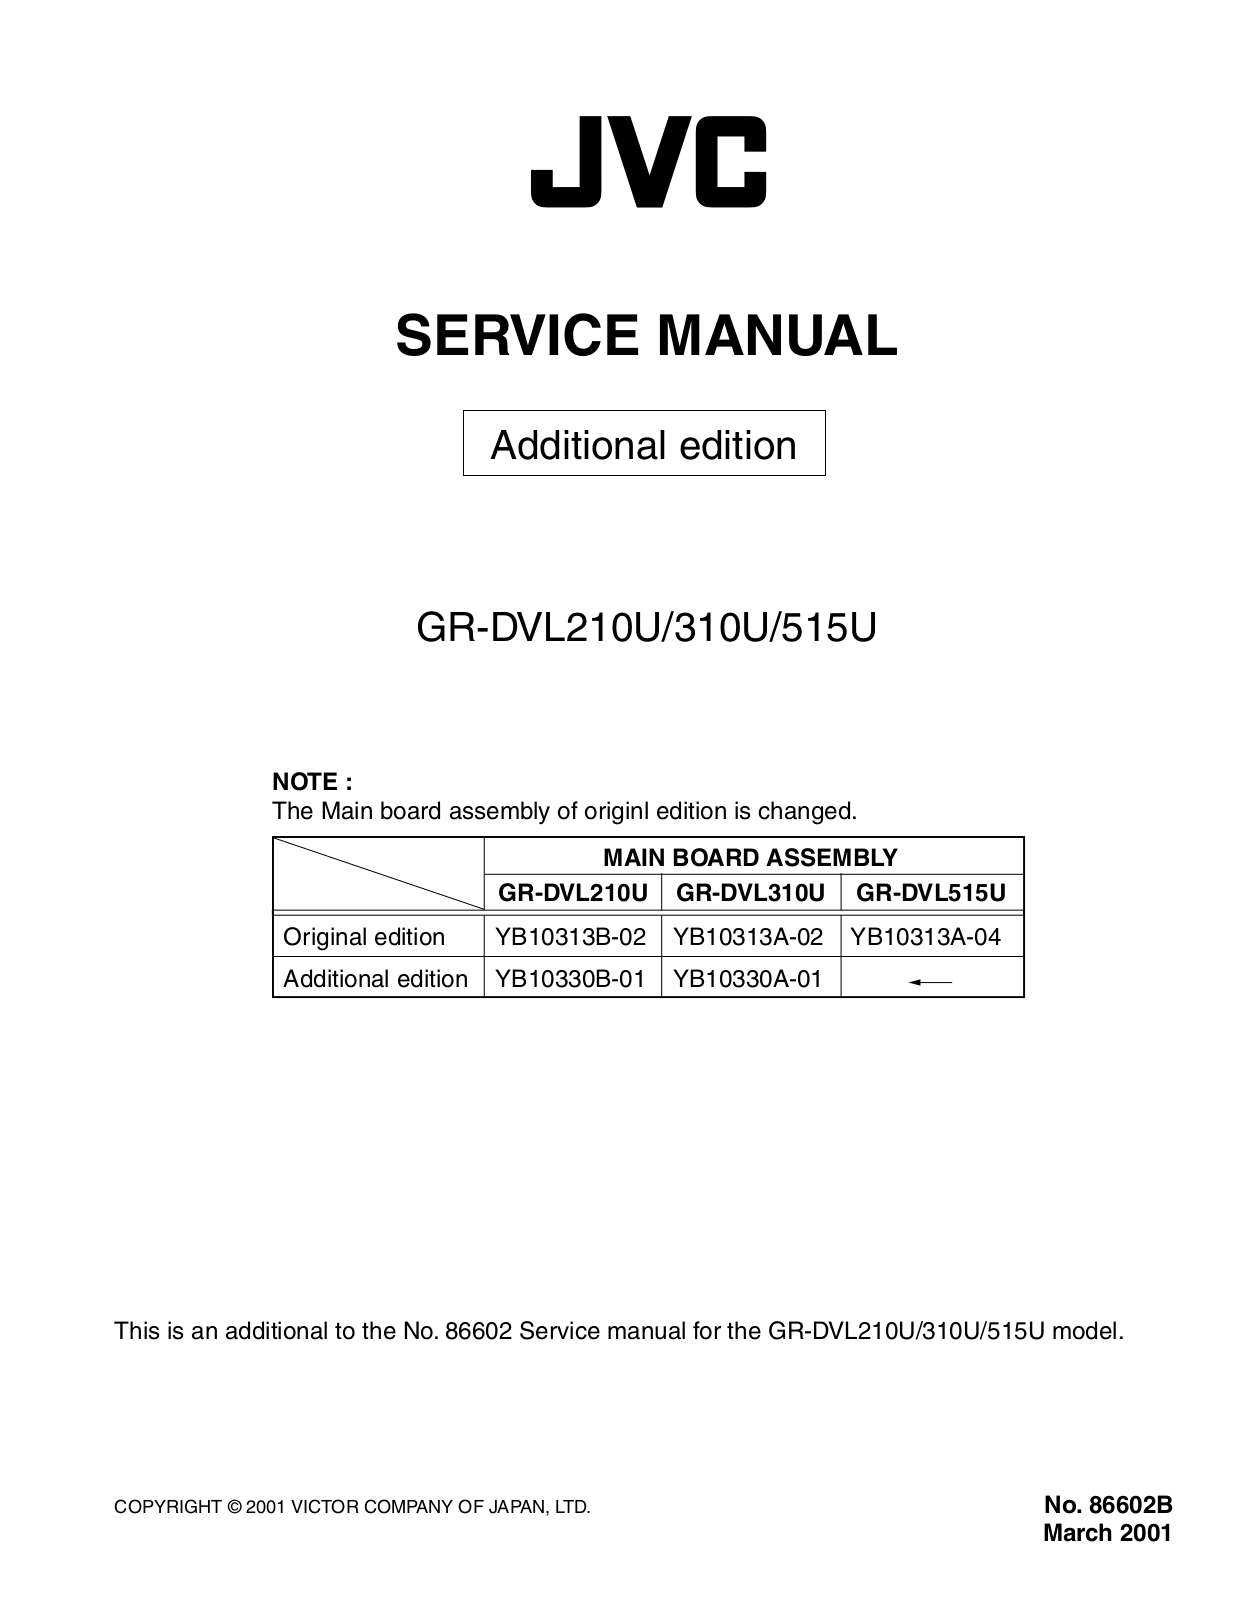 JVC GR-DVL210U, GR-DVL310U, GR-DVL515U Service Manual